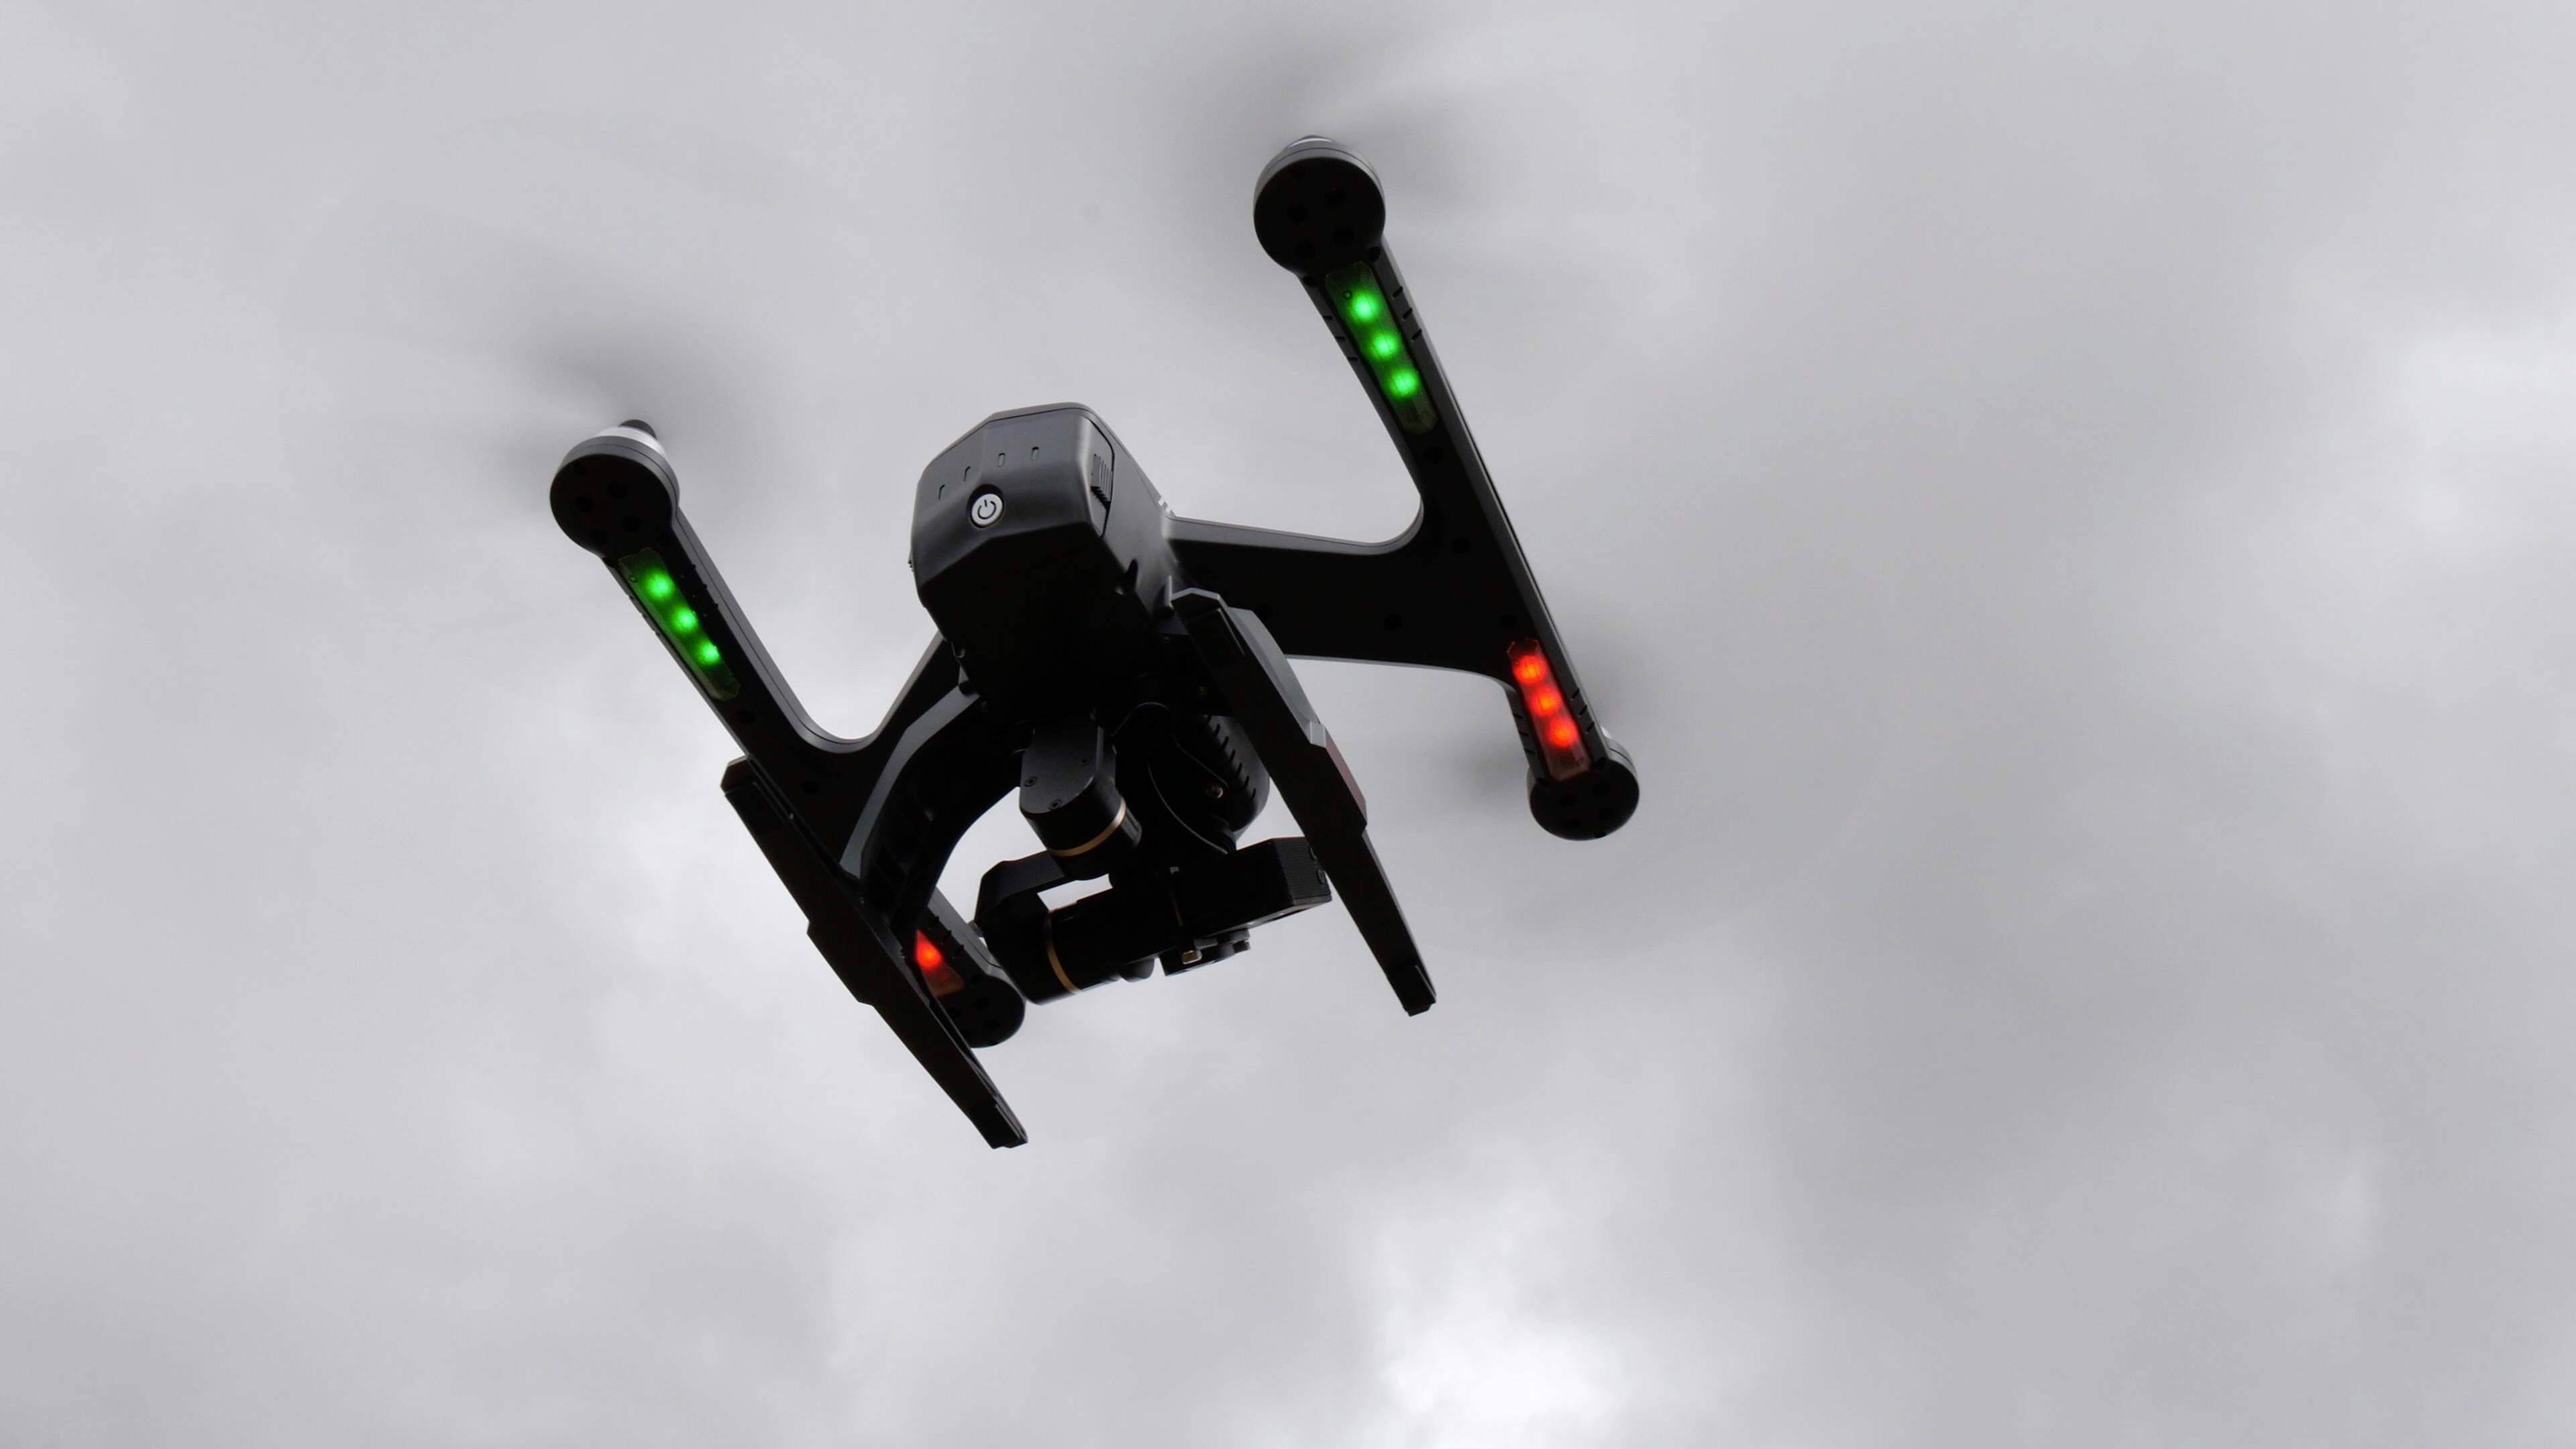 flypro xeagle drone video review xeagle03